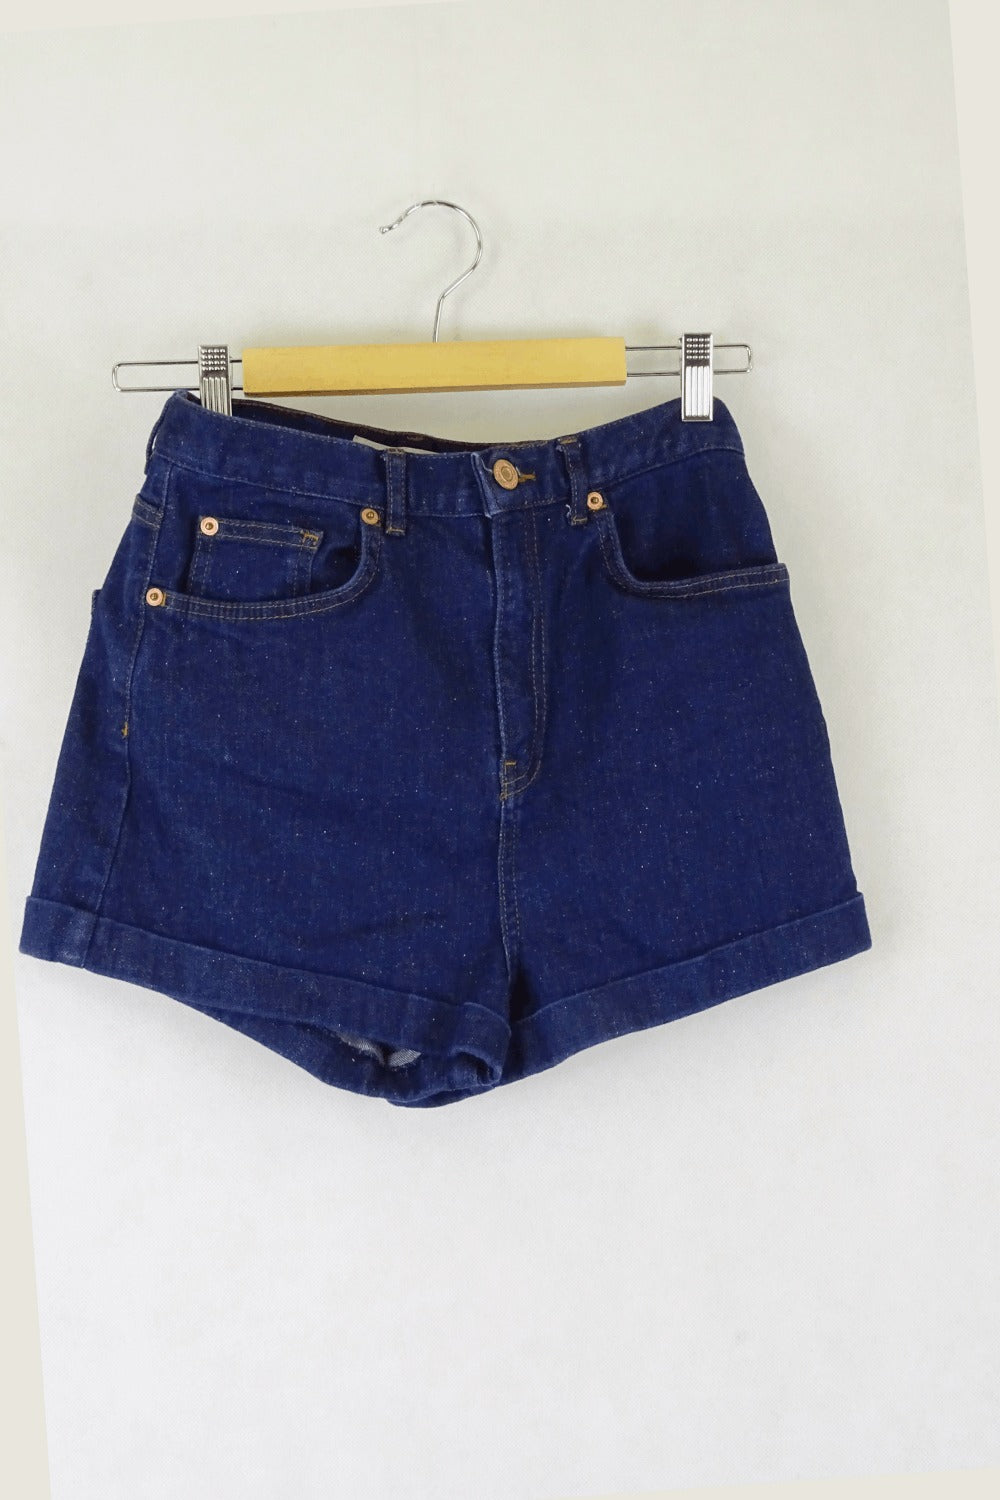 Topshop Blue Denim Shorts 10